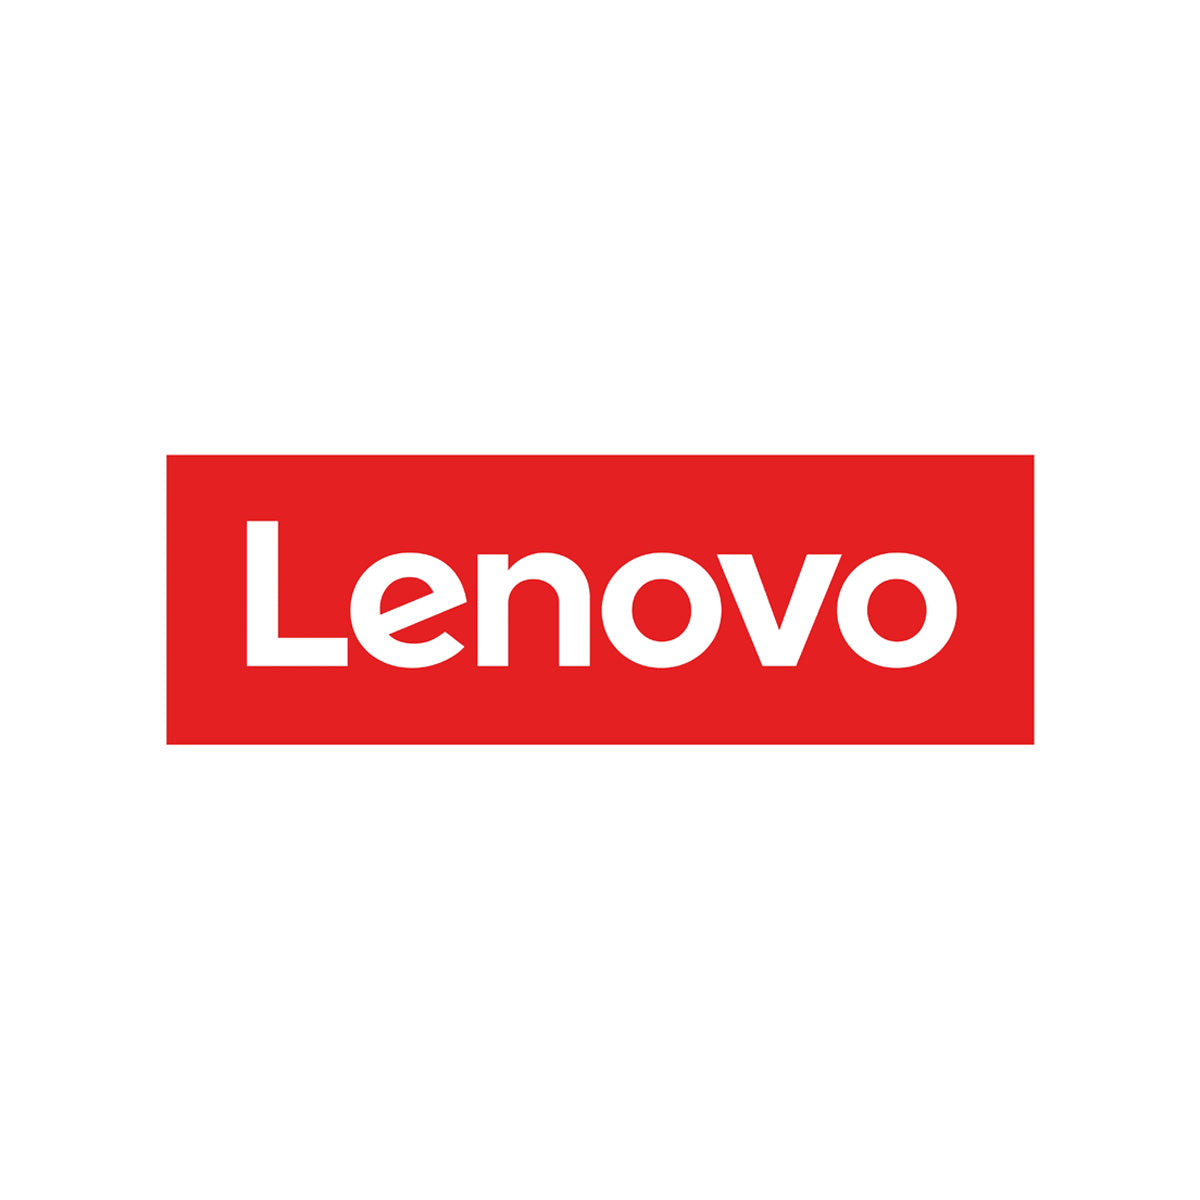 Lenovo Refurbished Laptop Computers